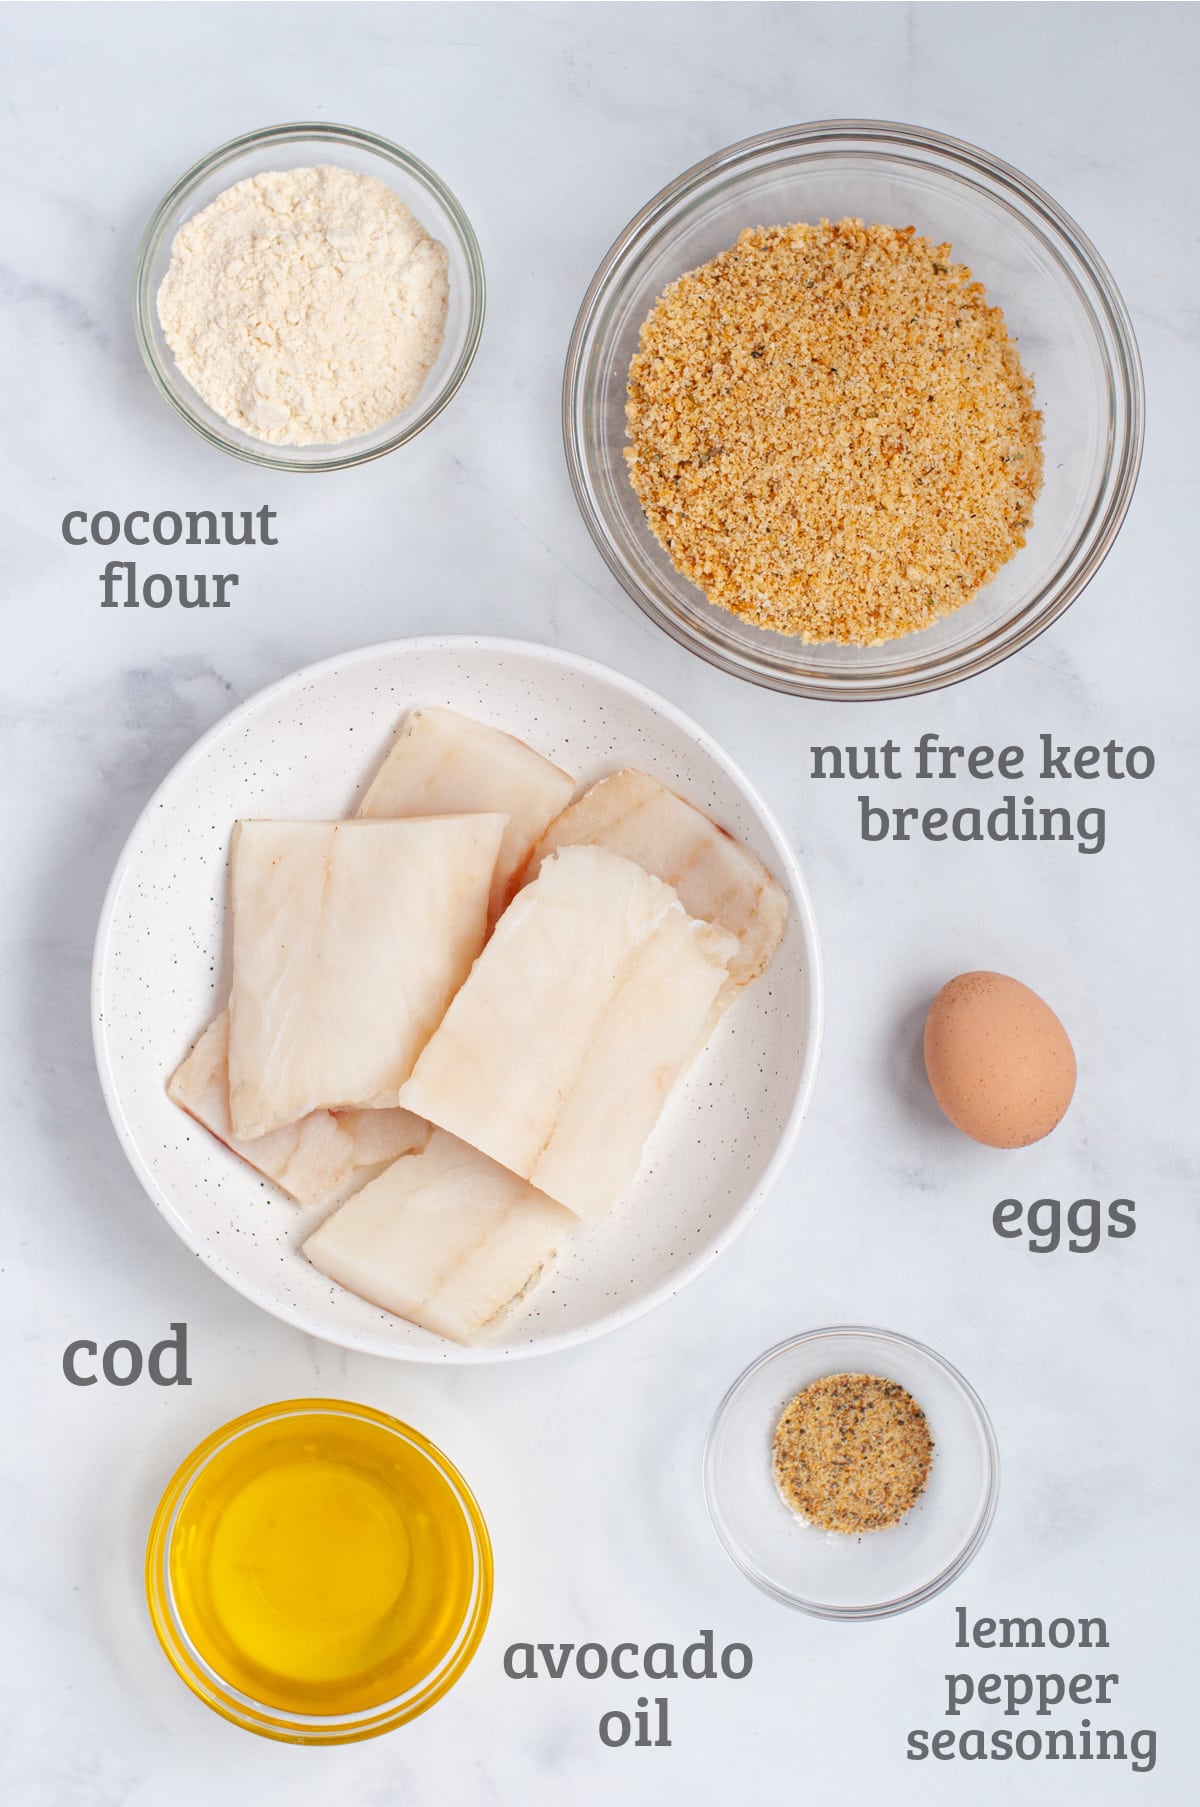 ingredients for air fryer fish nuggets - cod, breading, eggs, seasoning, coconut flour